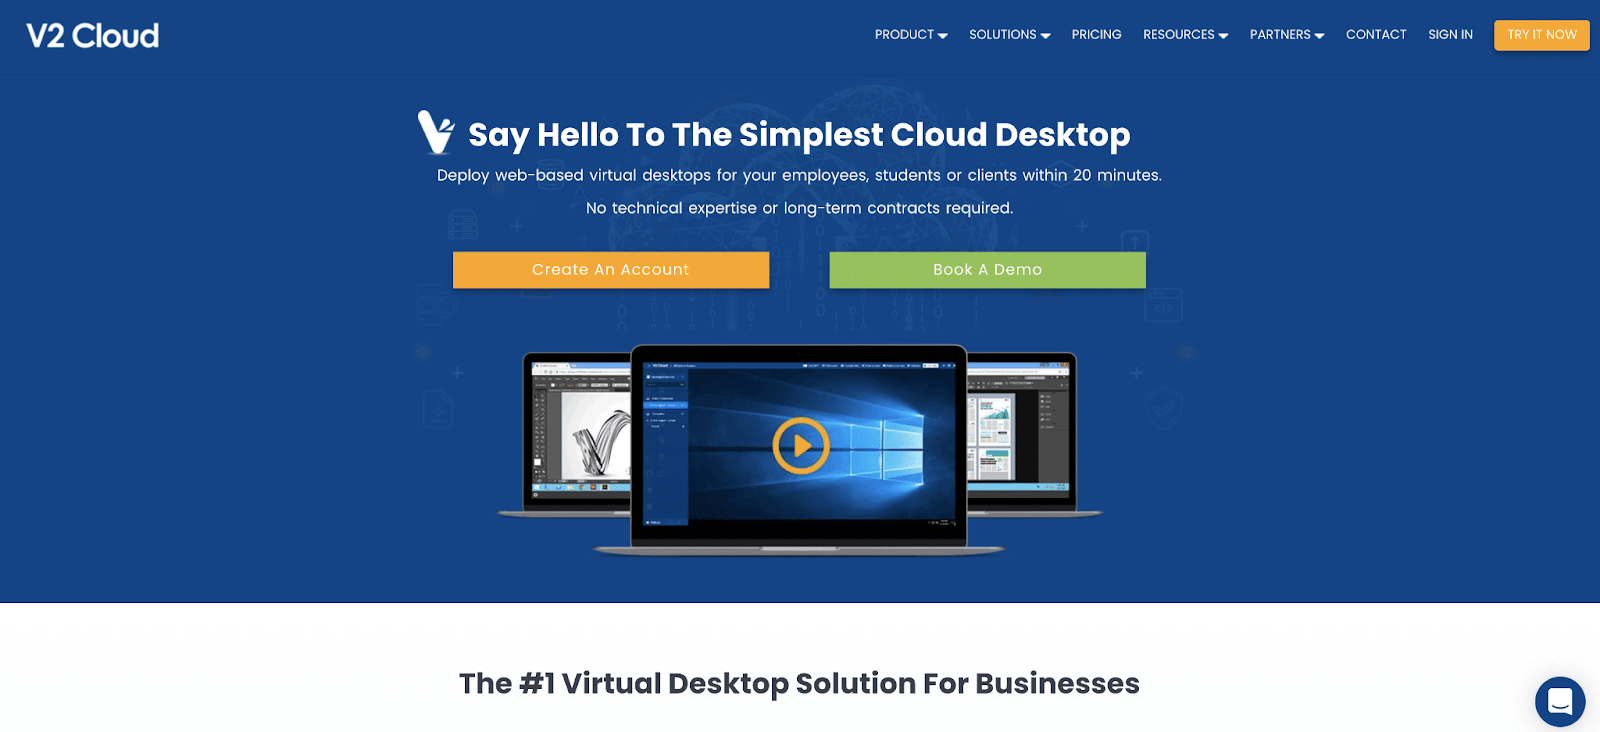 V2 Cloud website homepage